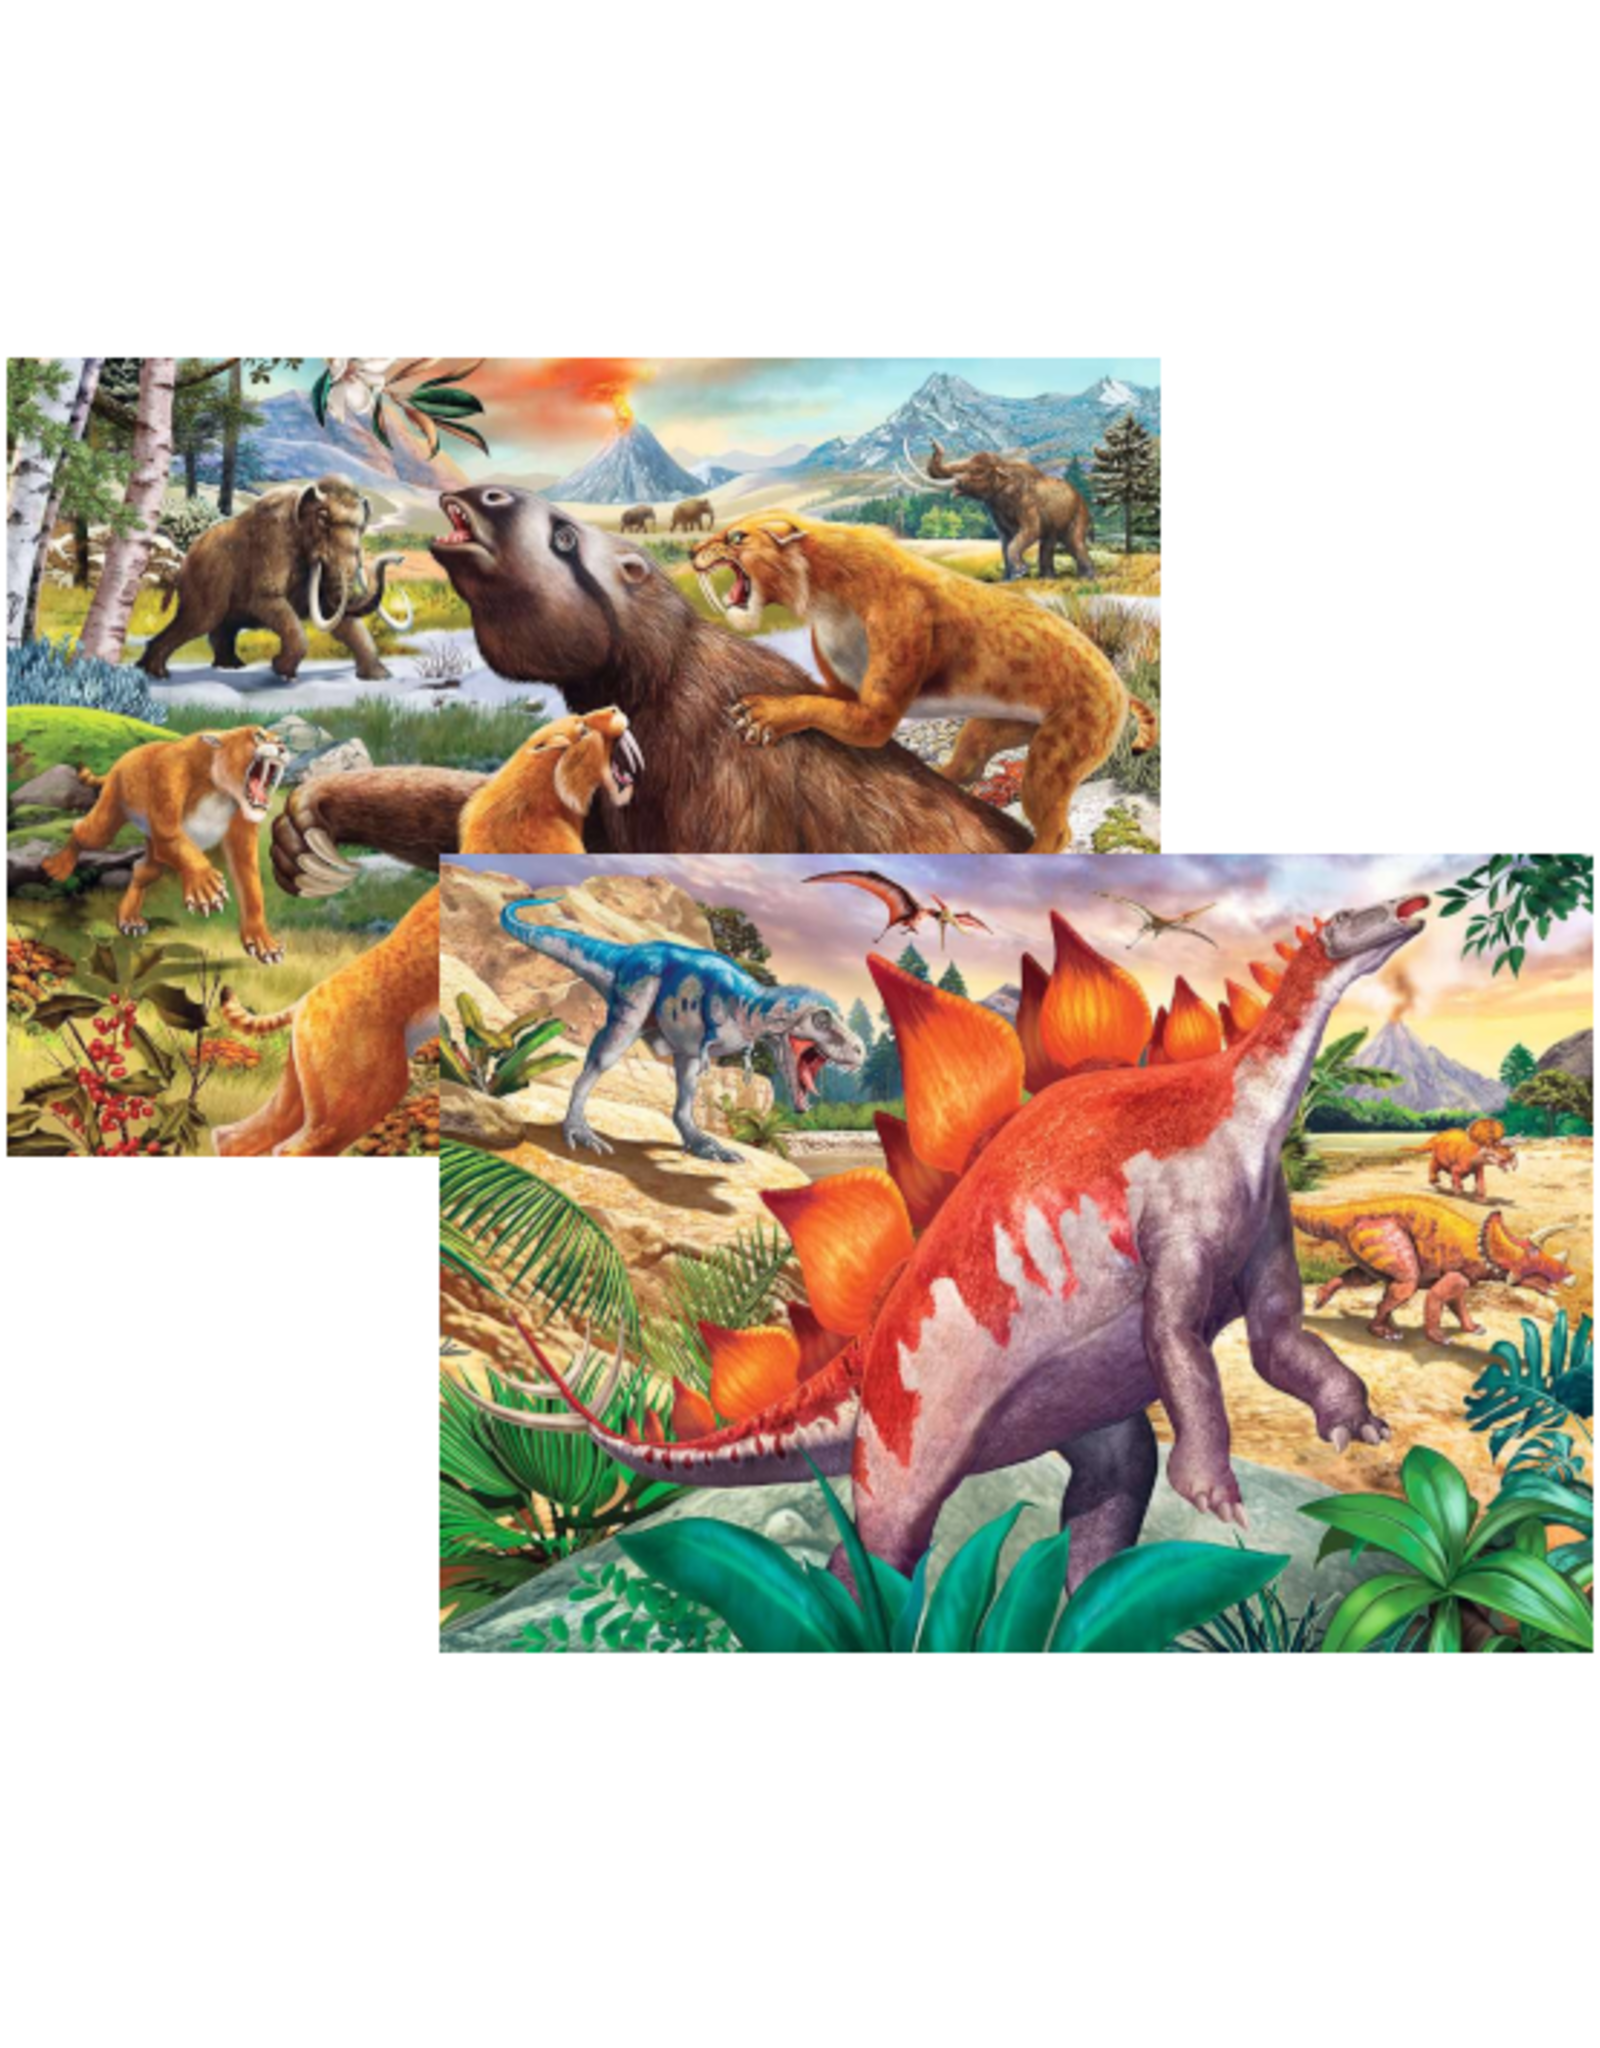 Ravensburger Ravensburger - 4+ - 2 x 24 - Jurassic Wildlife